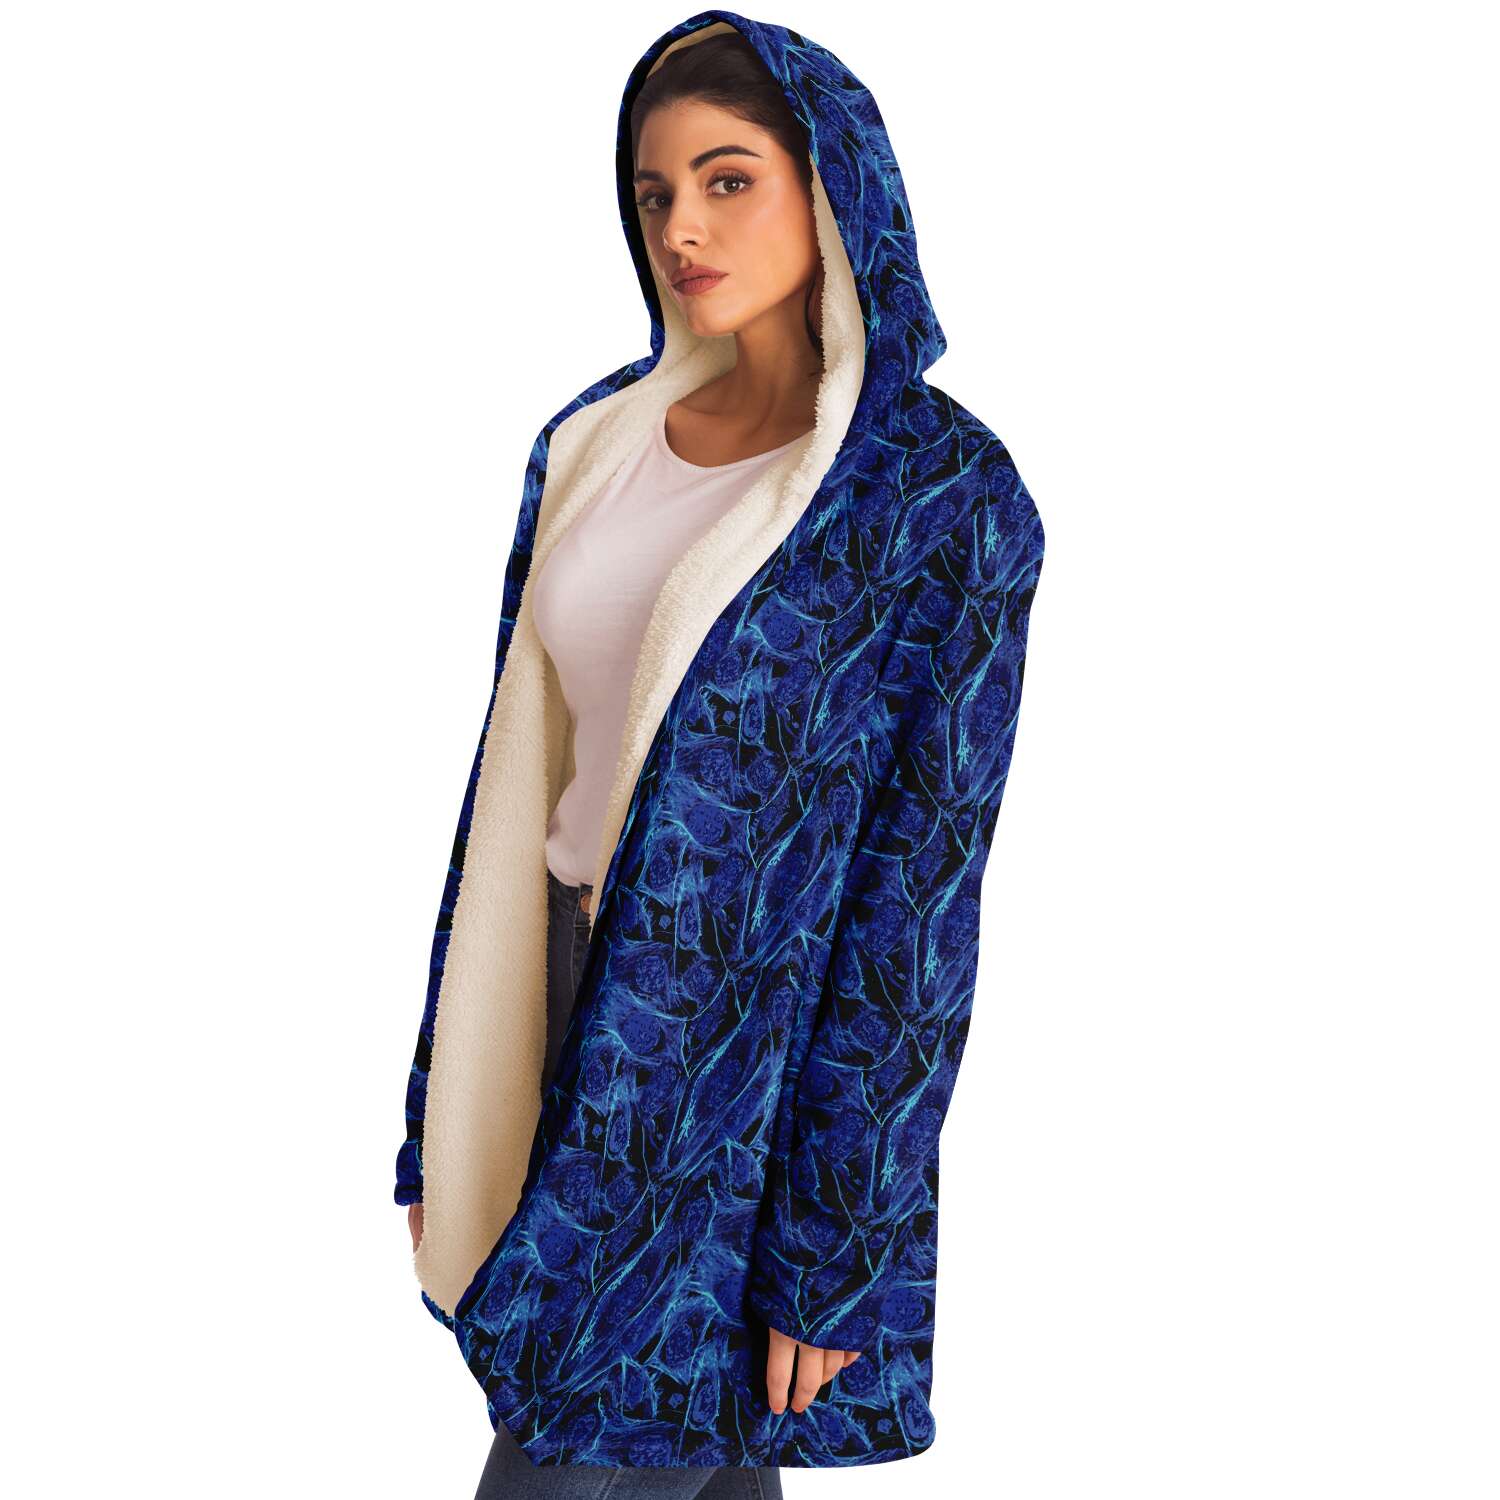 Blue Lighting Hooded Cloak with Pockets - Custom Sewn